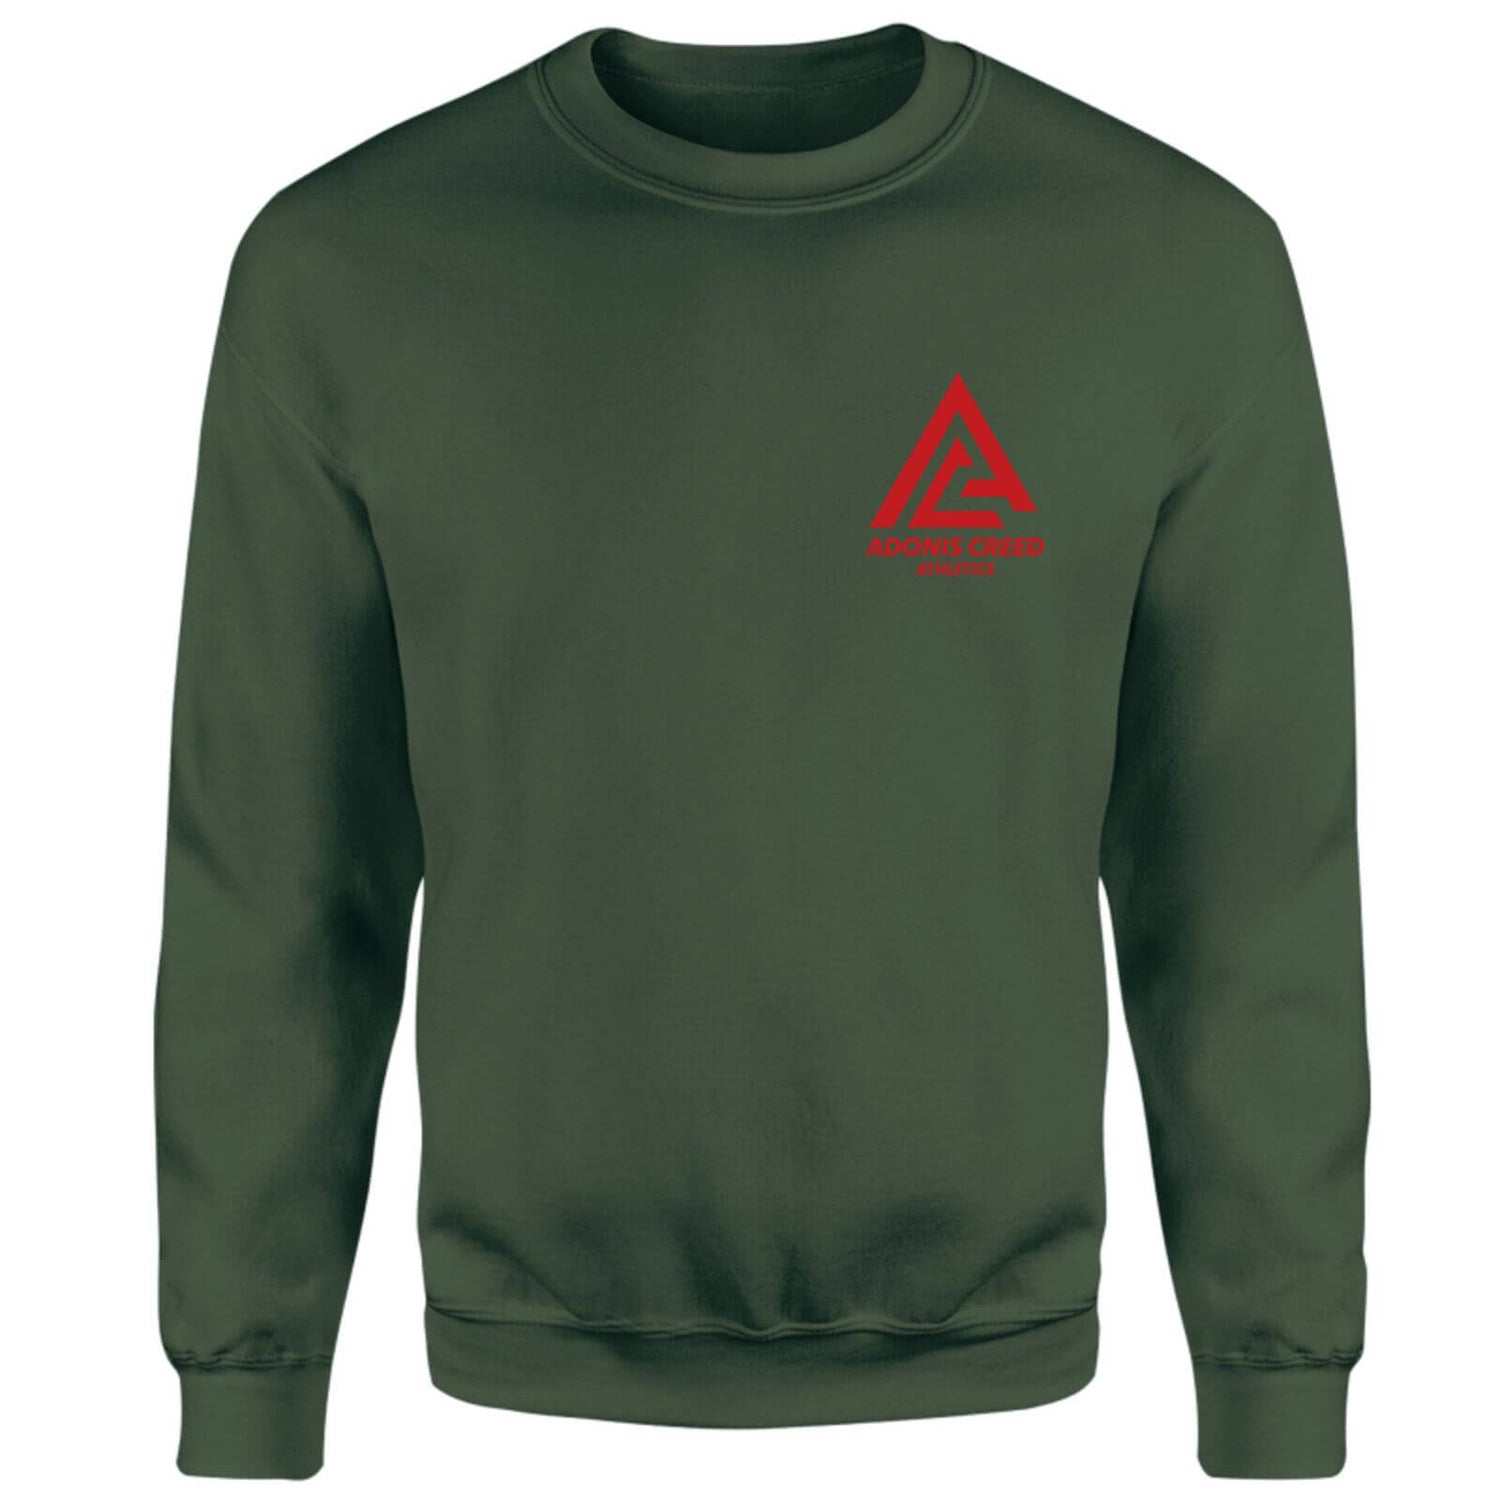 Creed Adonis Creed Athletics Logo Sweatshirt - Green - XS